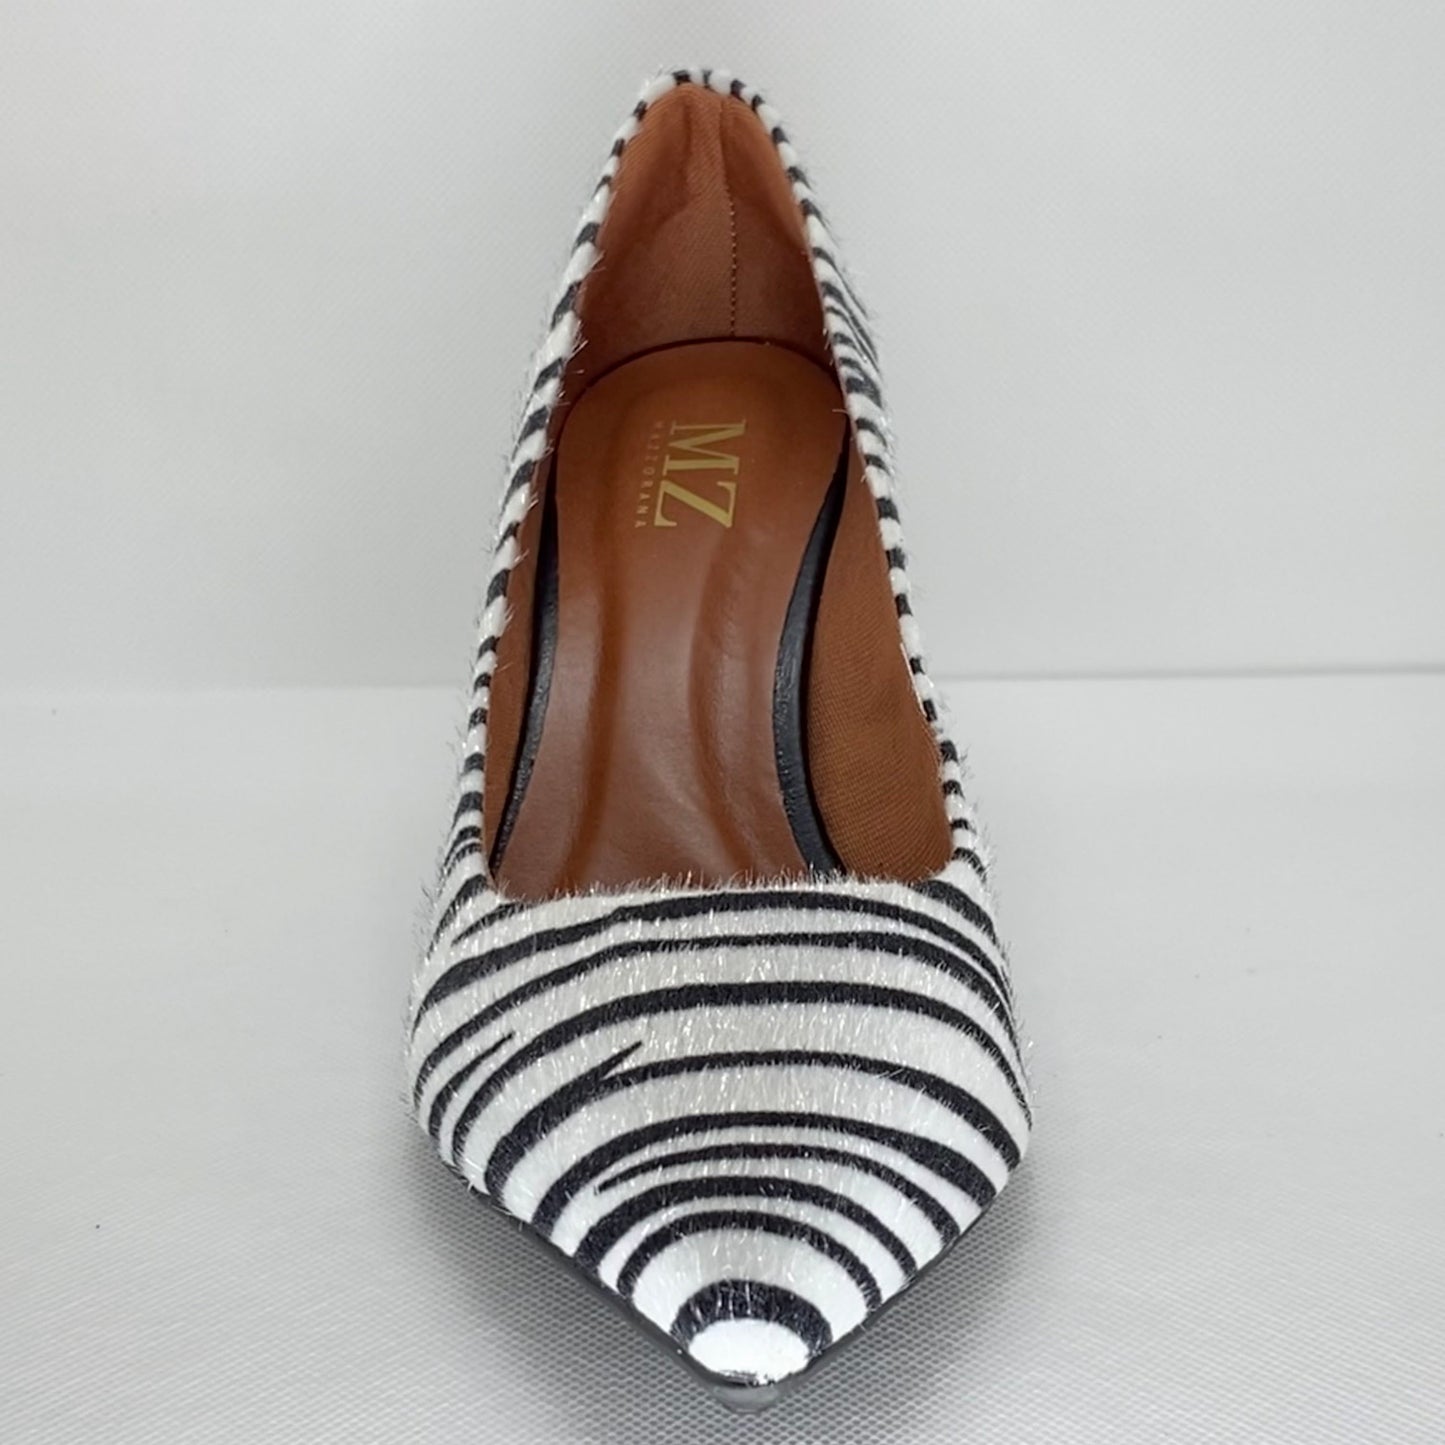 Sao Sebastiao Zebra Pumps Women Shoes